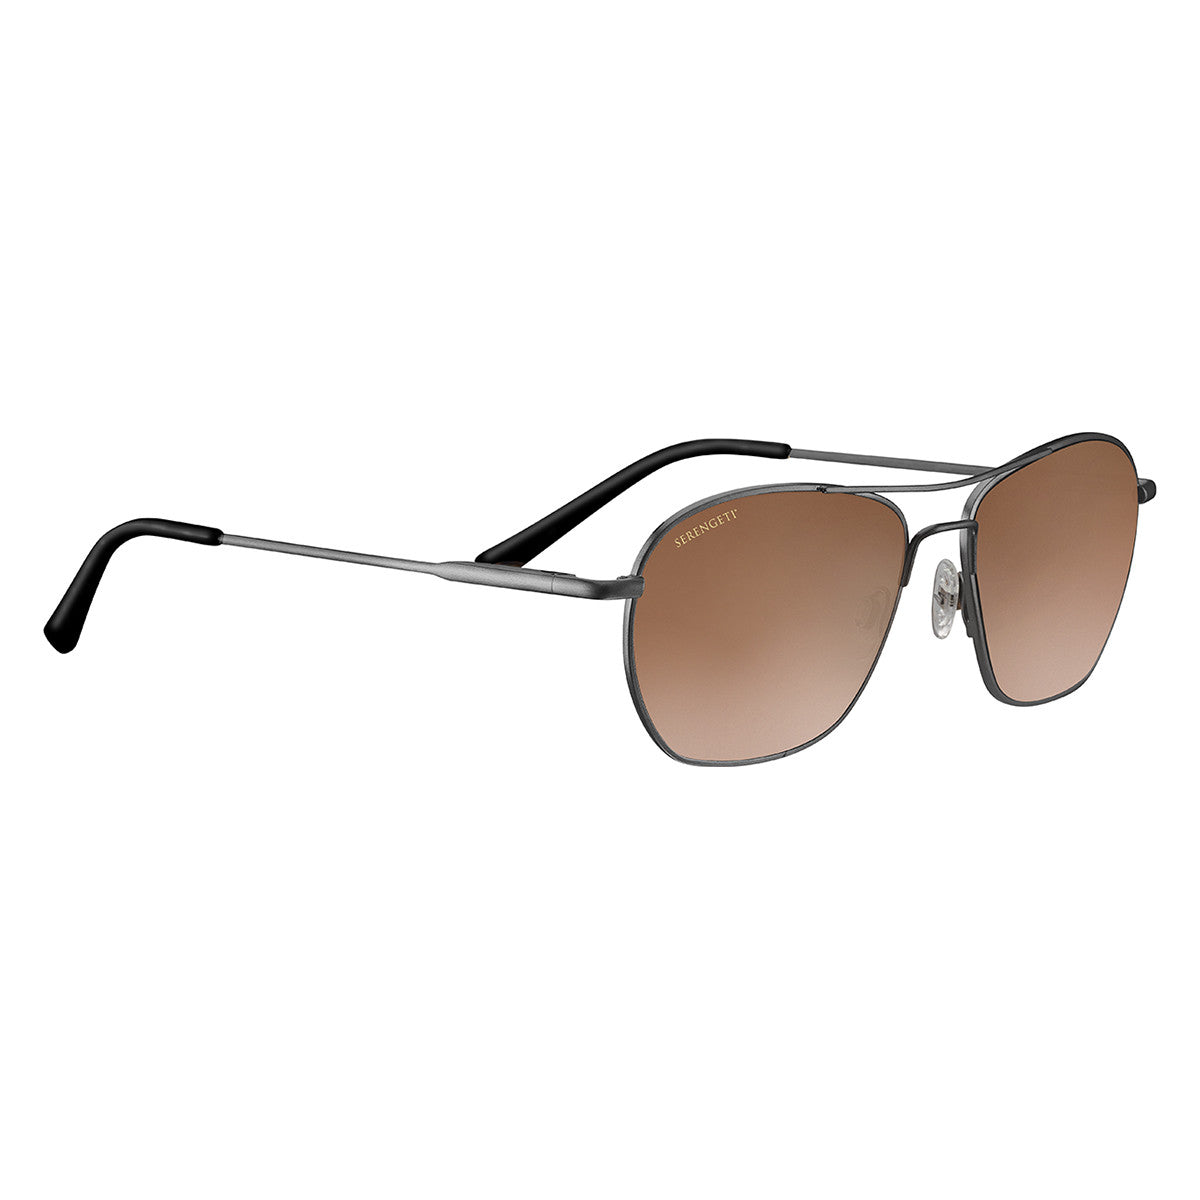 Serengeti Lunger Sunglasses  Shiny Dark Gunmetal Medium, Large